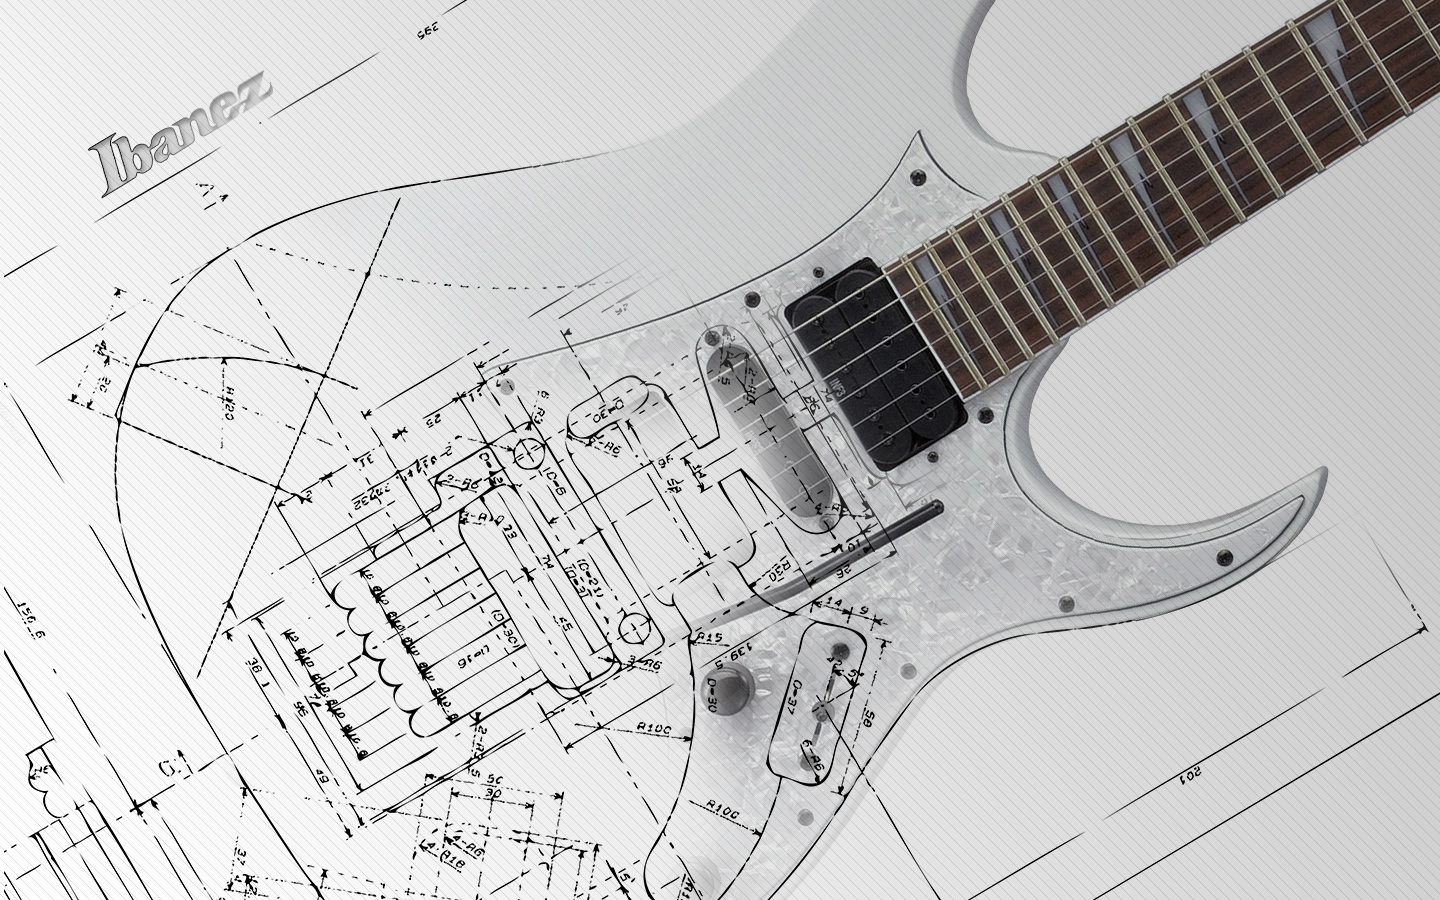 Ibanez Electric Guitar Blueprint